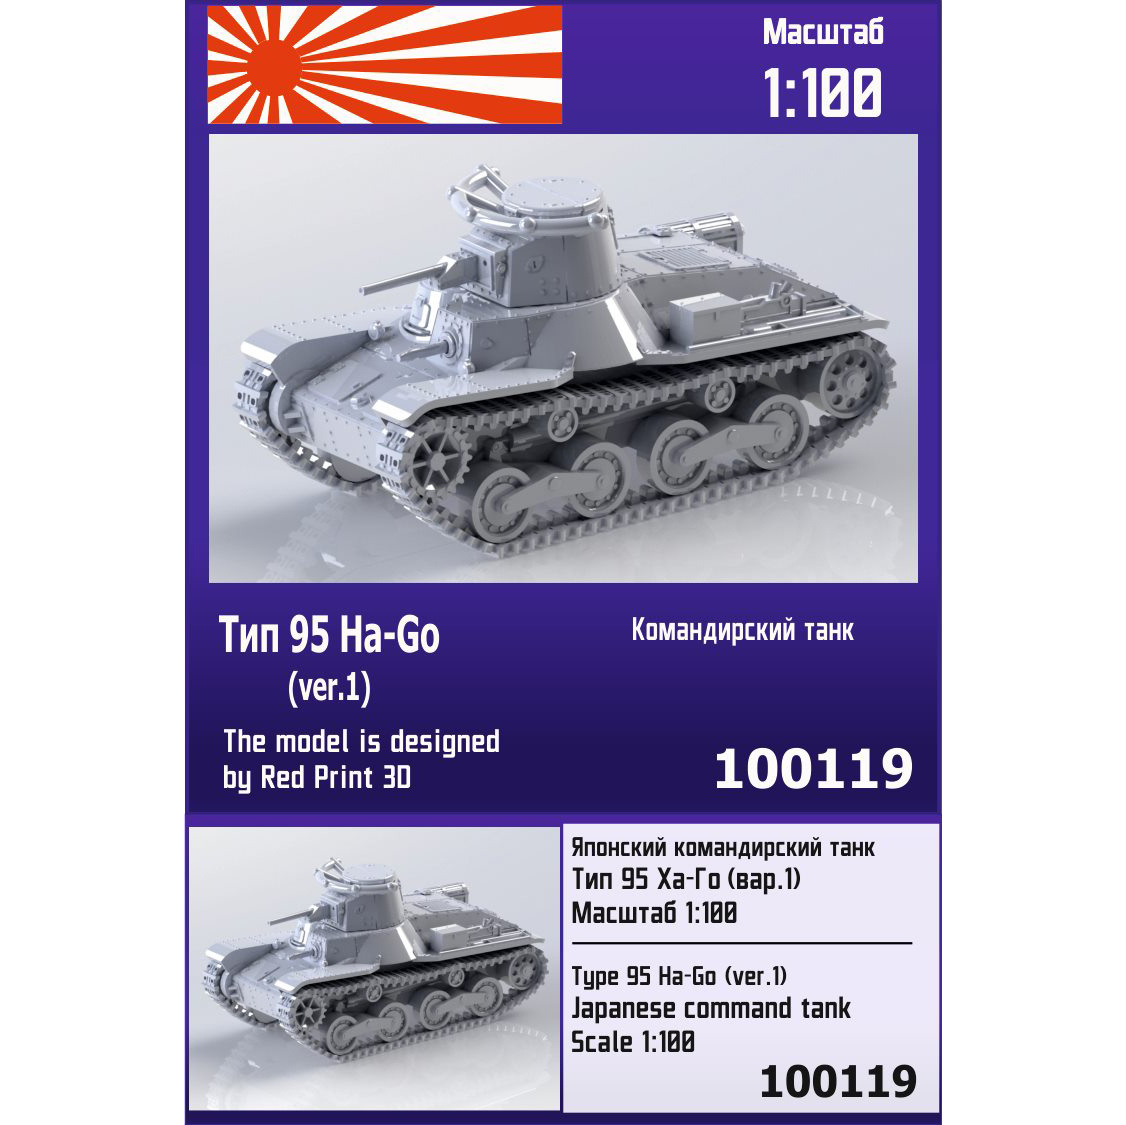 100119  техника и вооружение  Японский командирский танк Тип 95 Ha-Go (вар. 1)  (1:100)